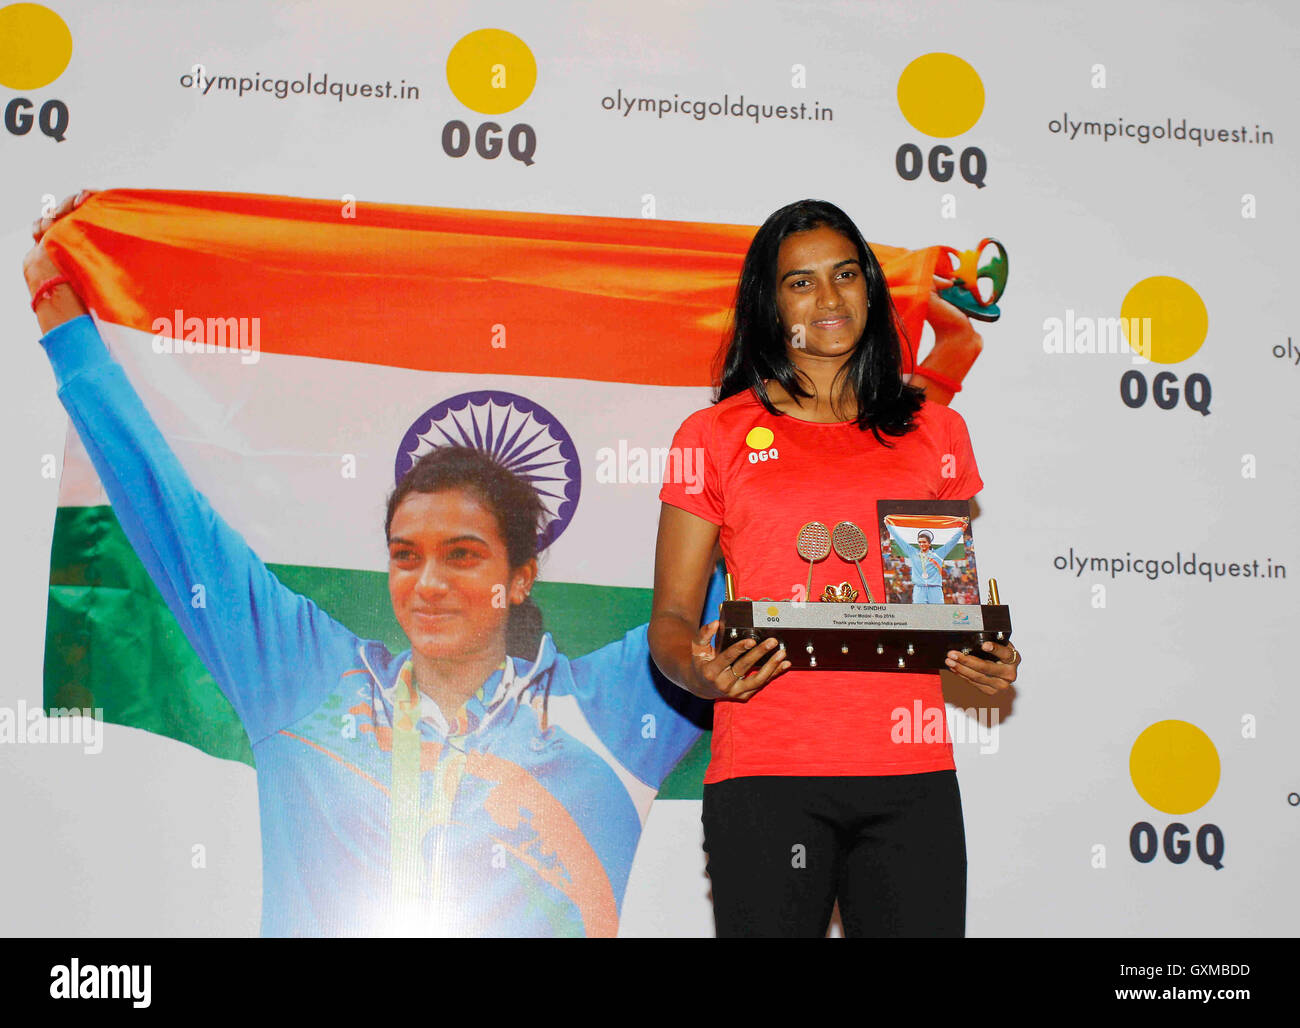 Indian badminton player Rio Olympics silver medallisat P V Sindhu felicitation function organised Olympic Gold Quest Mumbai Stock Photo